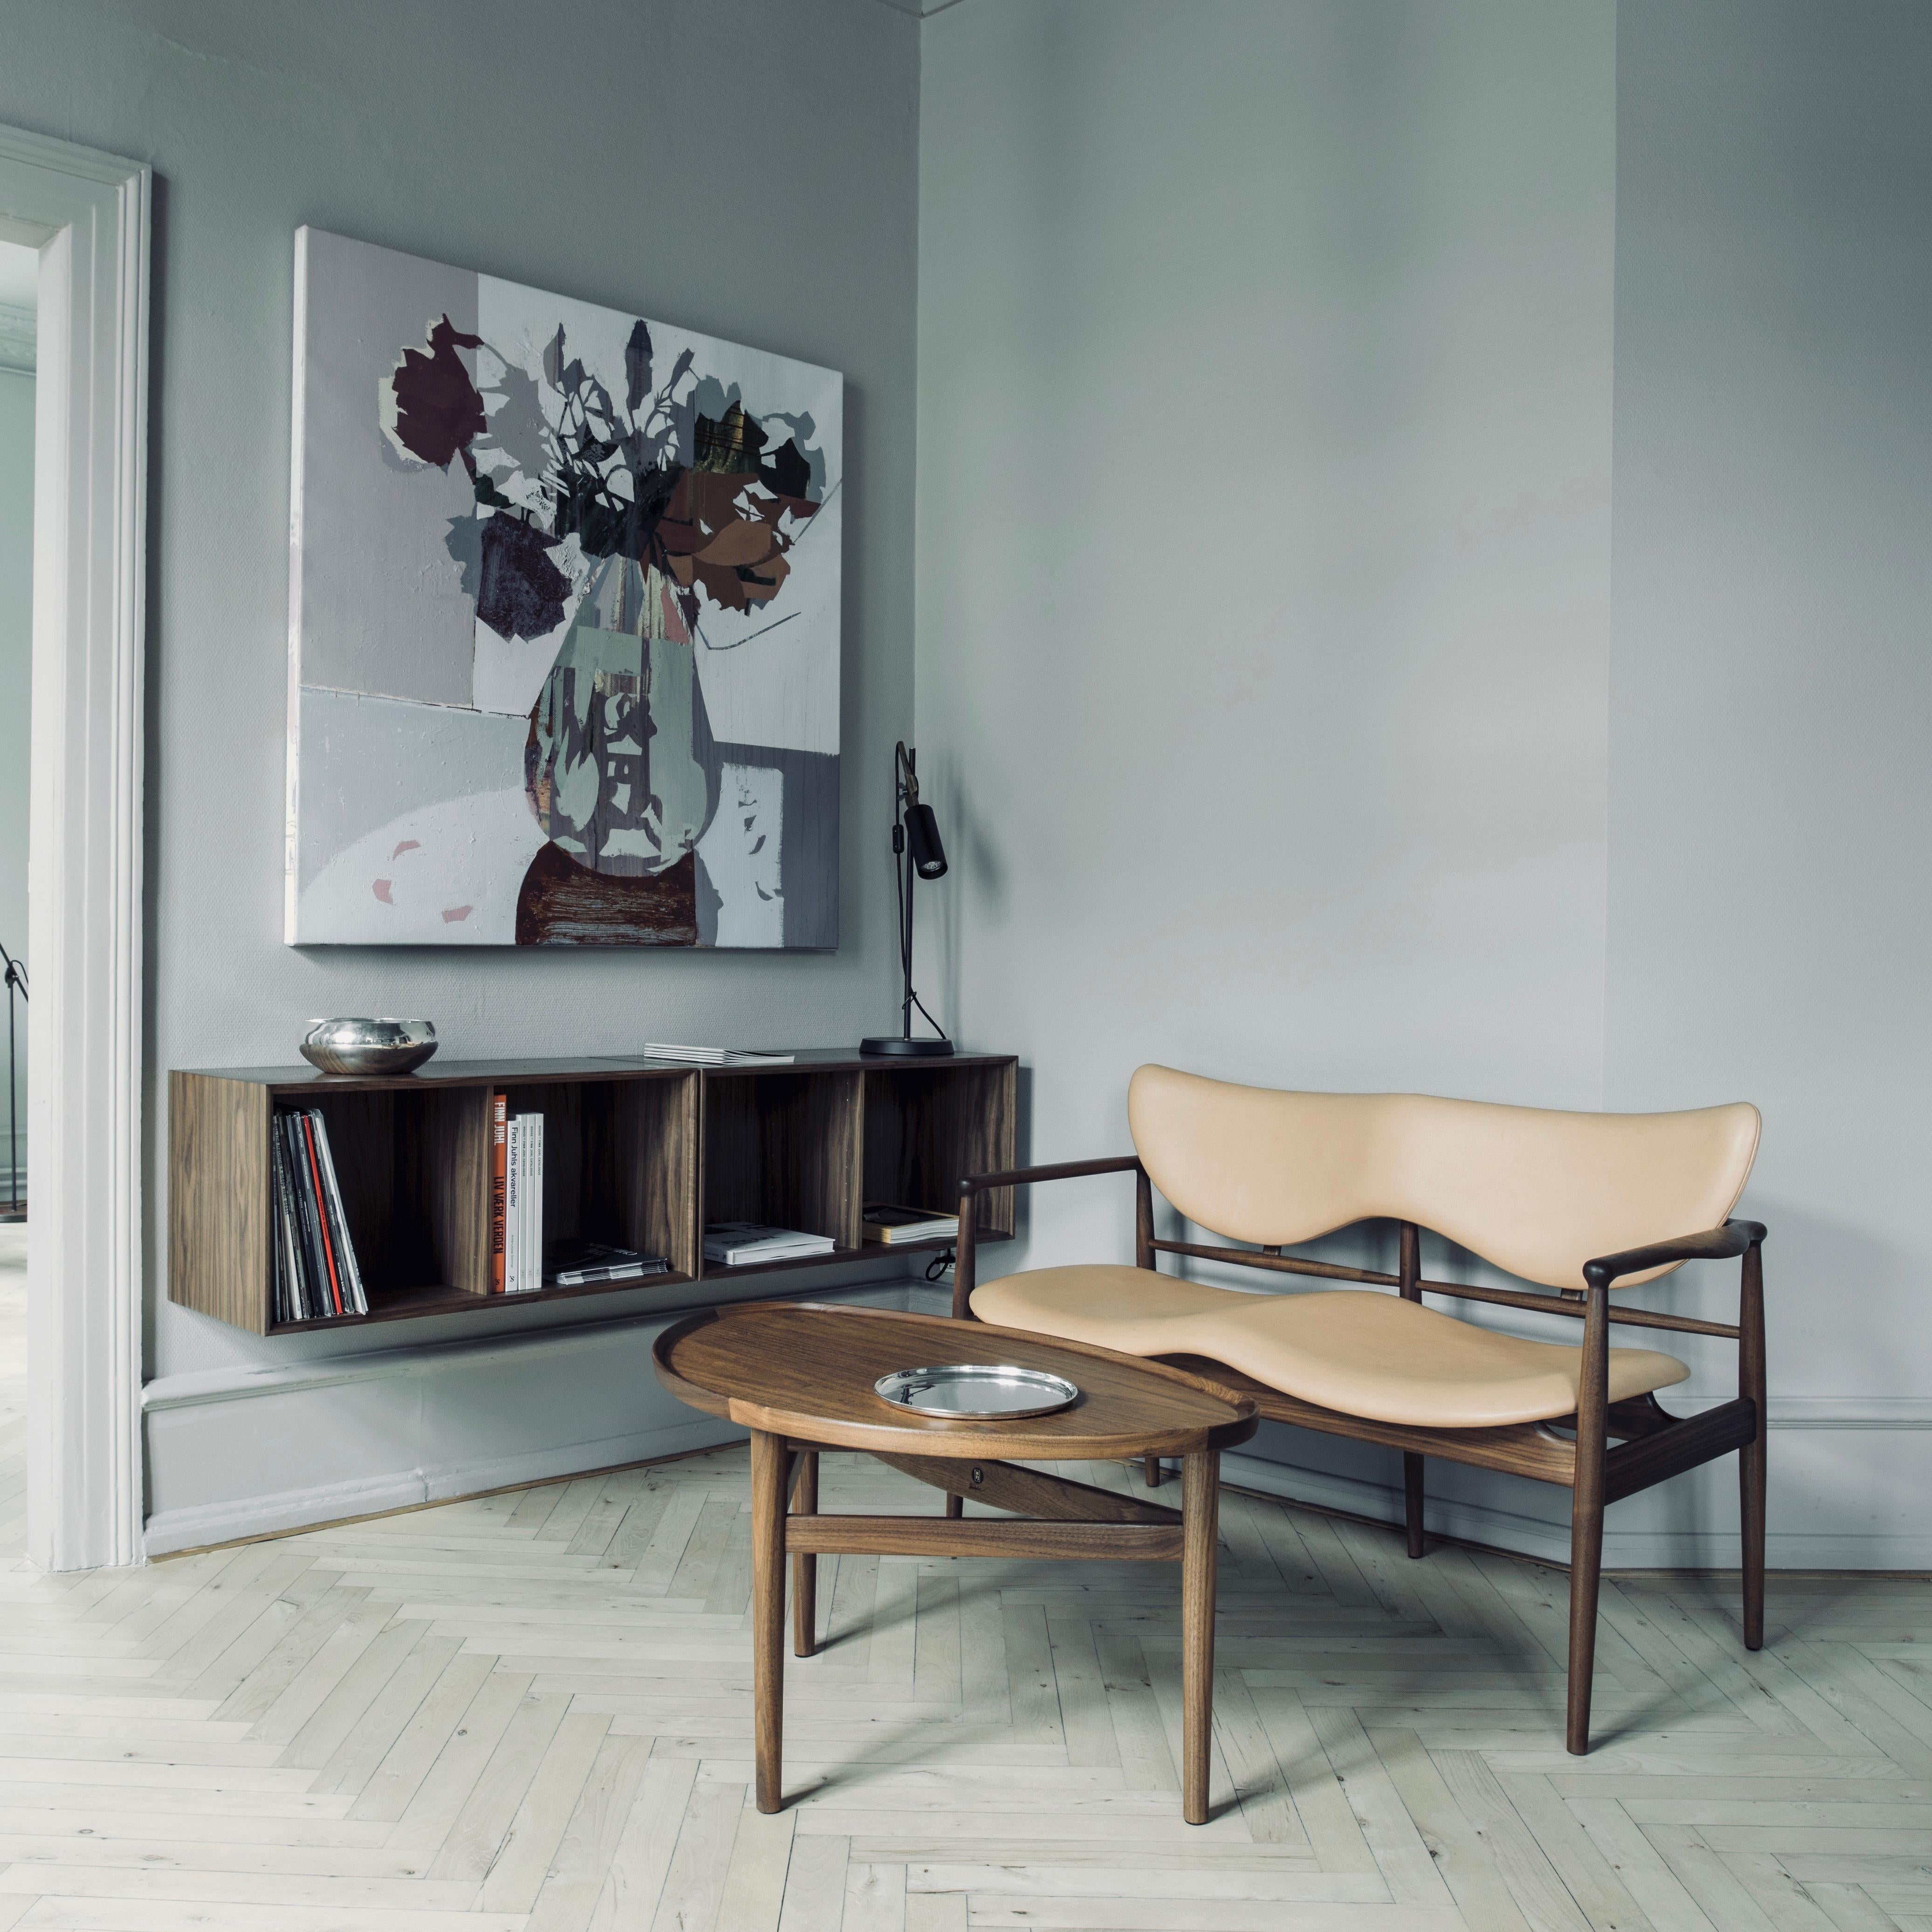 Finn Juhl 48 Sofa Bench Wood and Leather Iconic Danish Modern Design 8